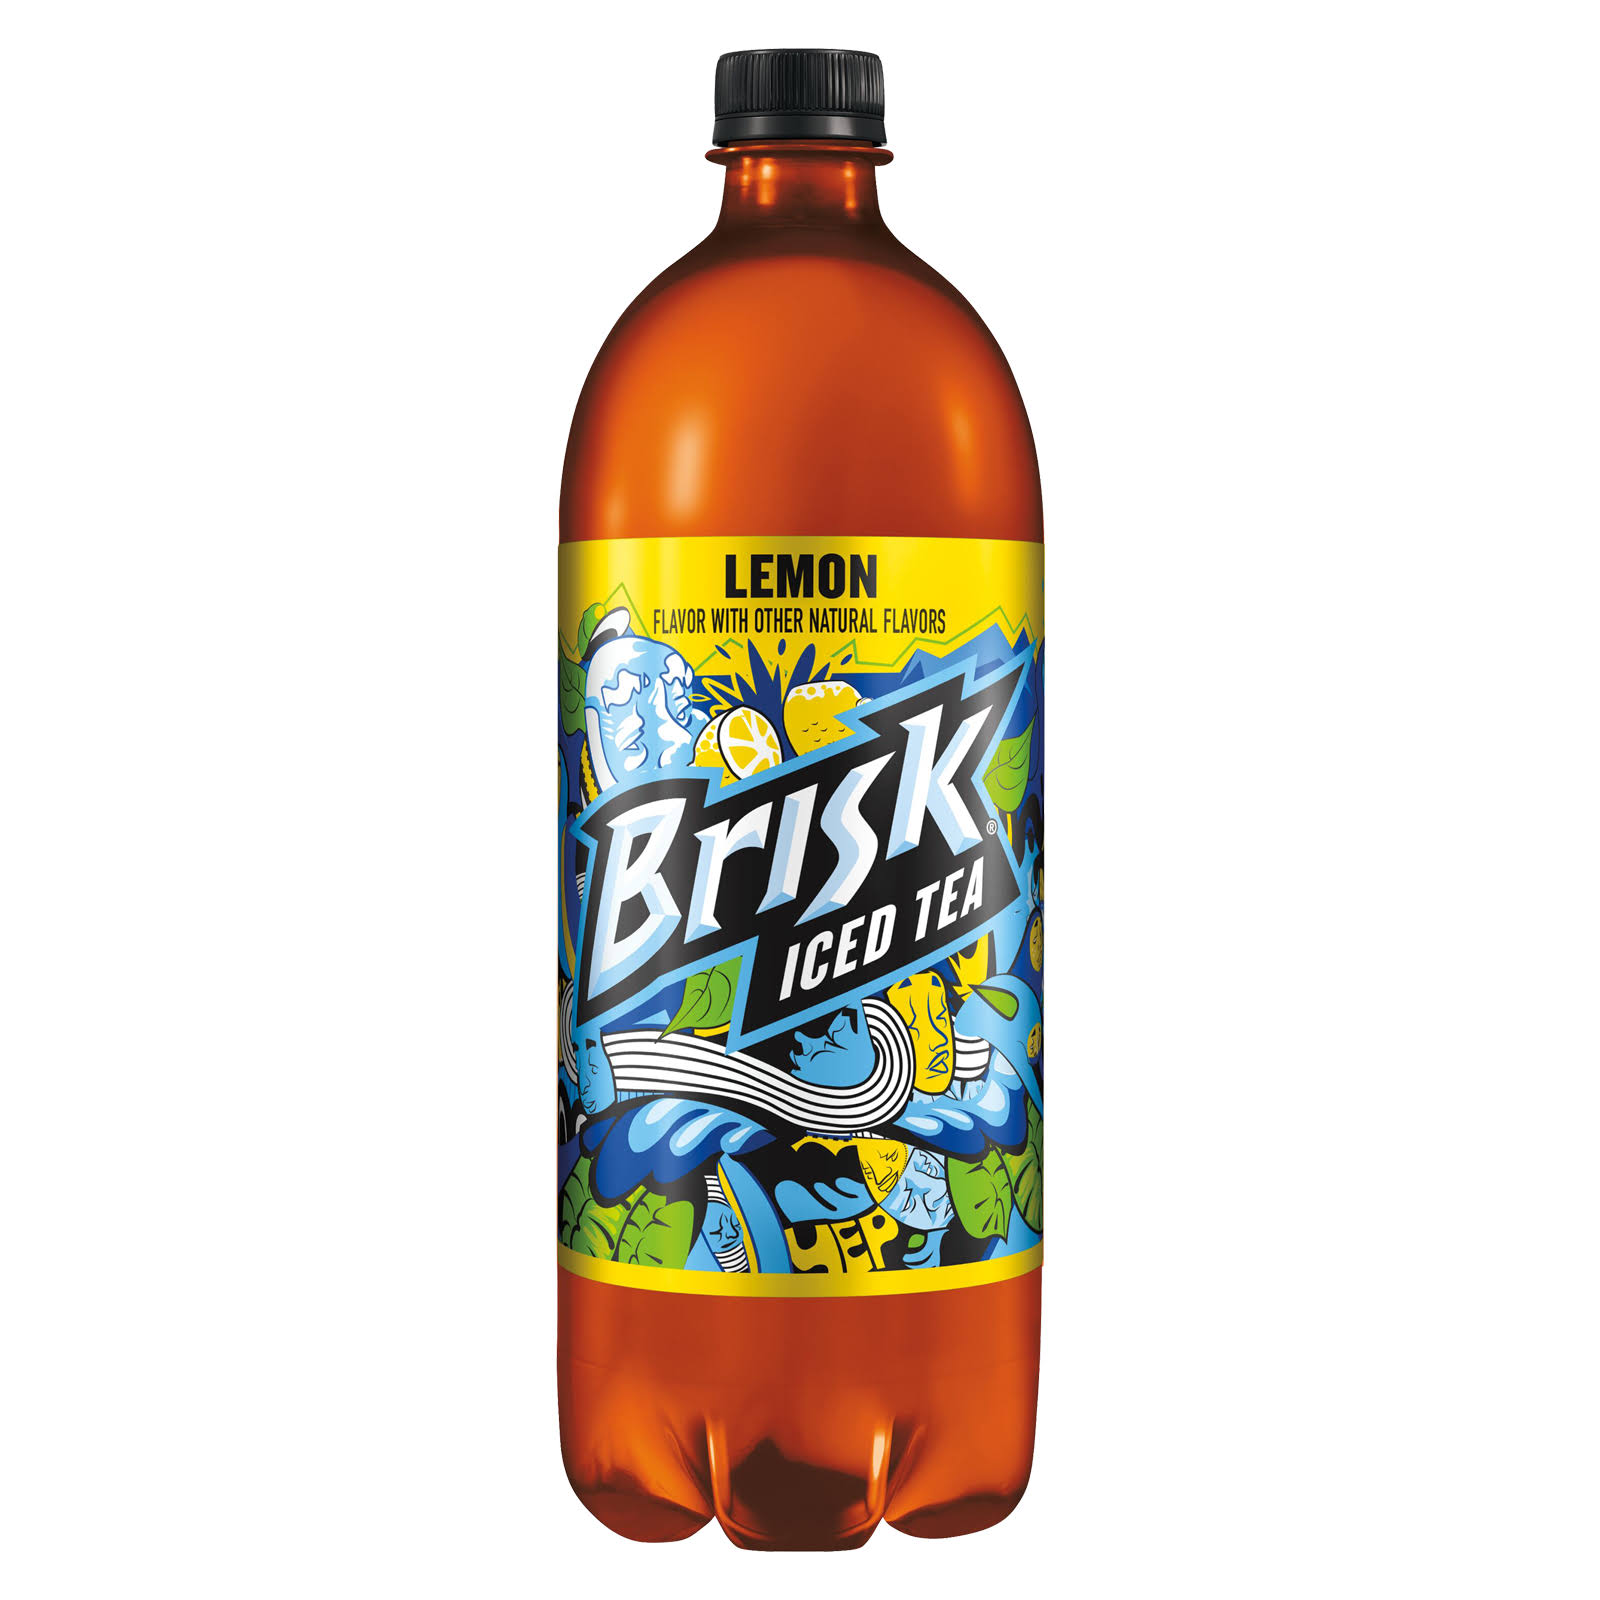 Brisk Iced Tea, Lemon - 1 l (1.05 qt)